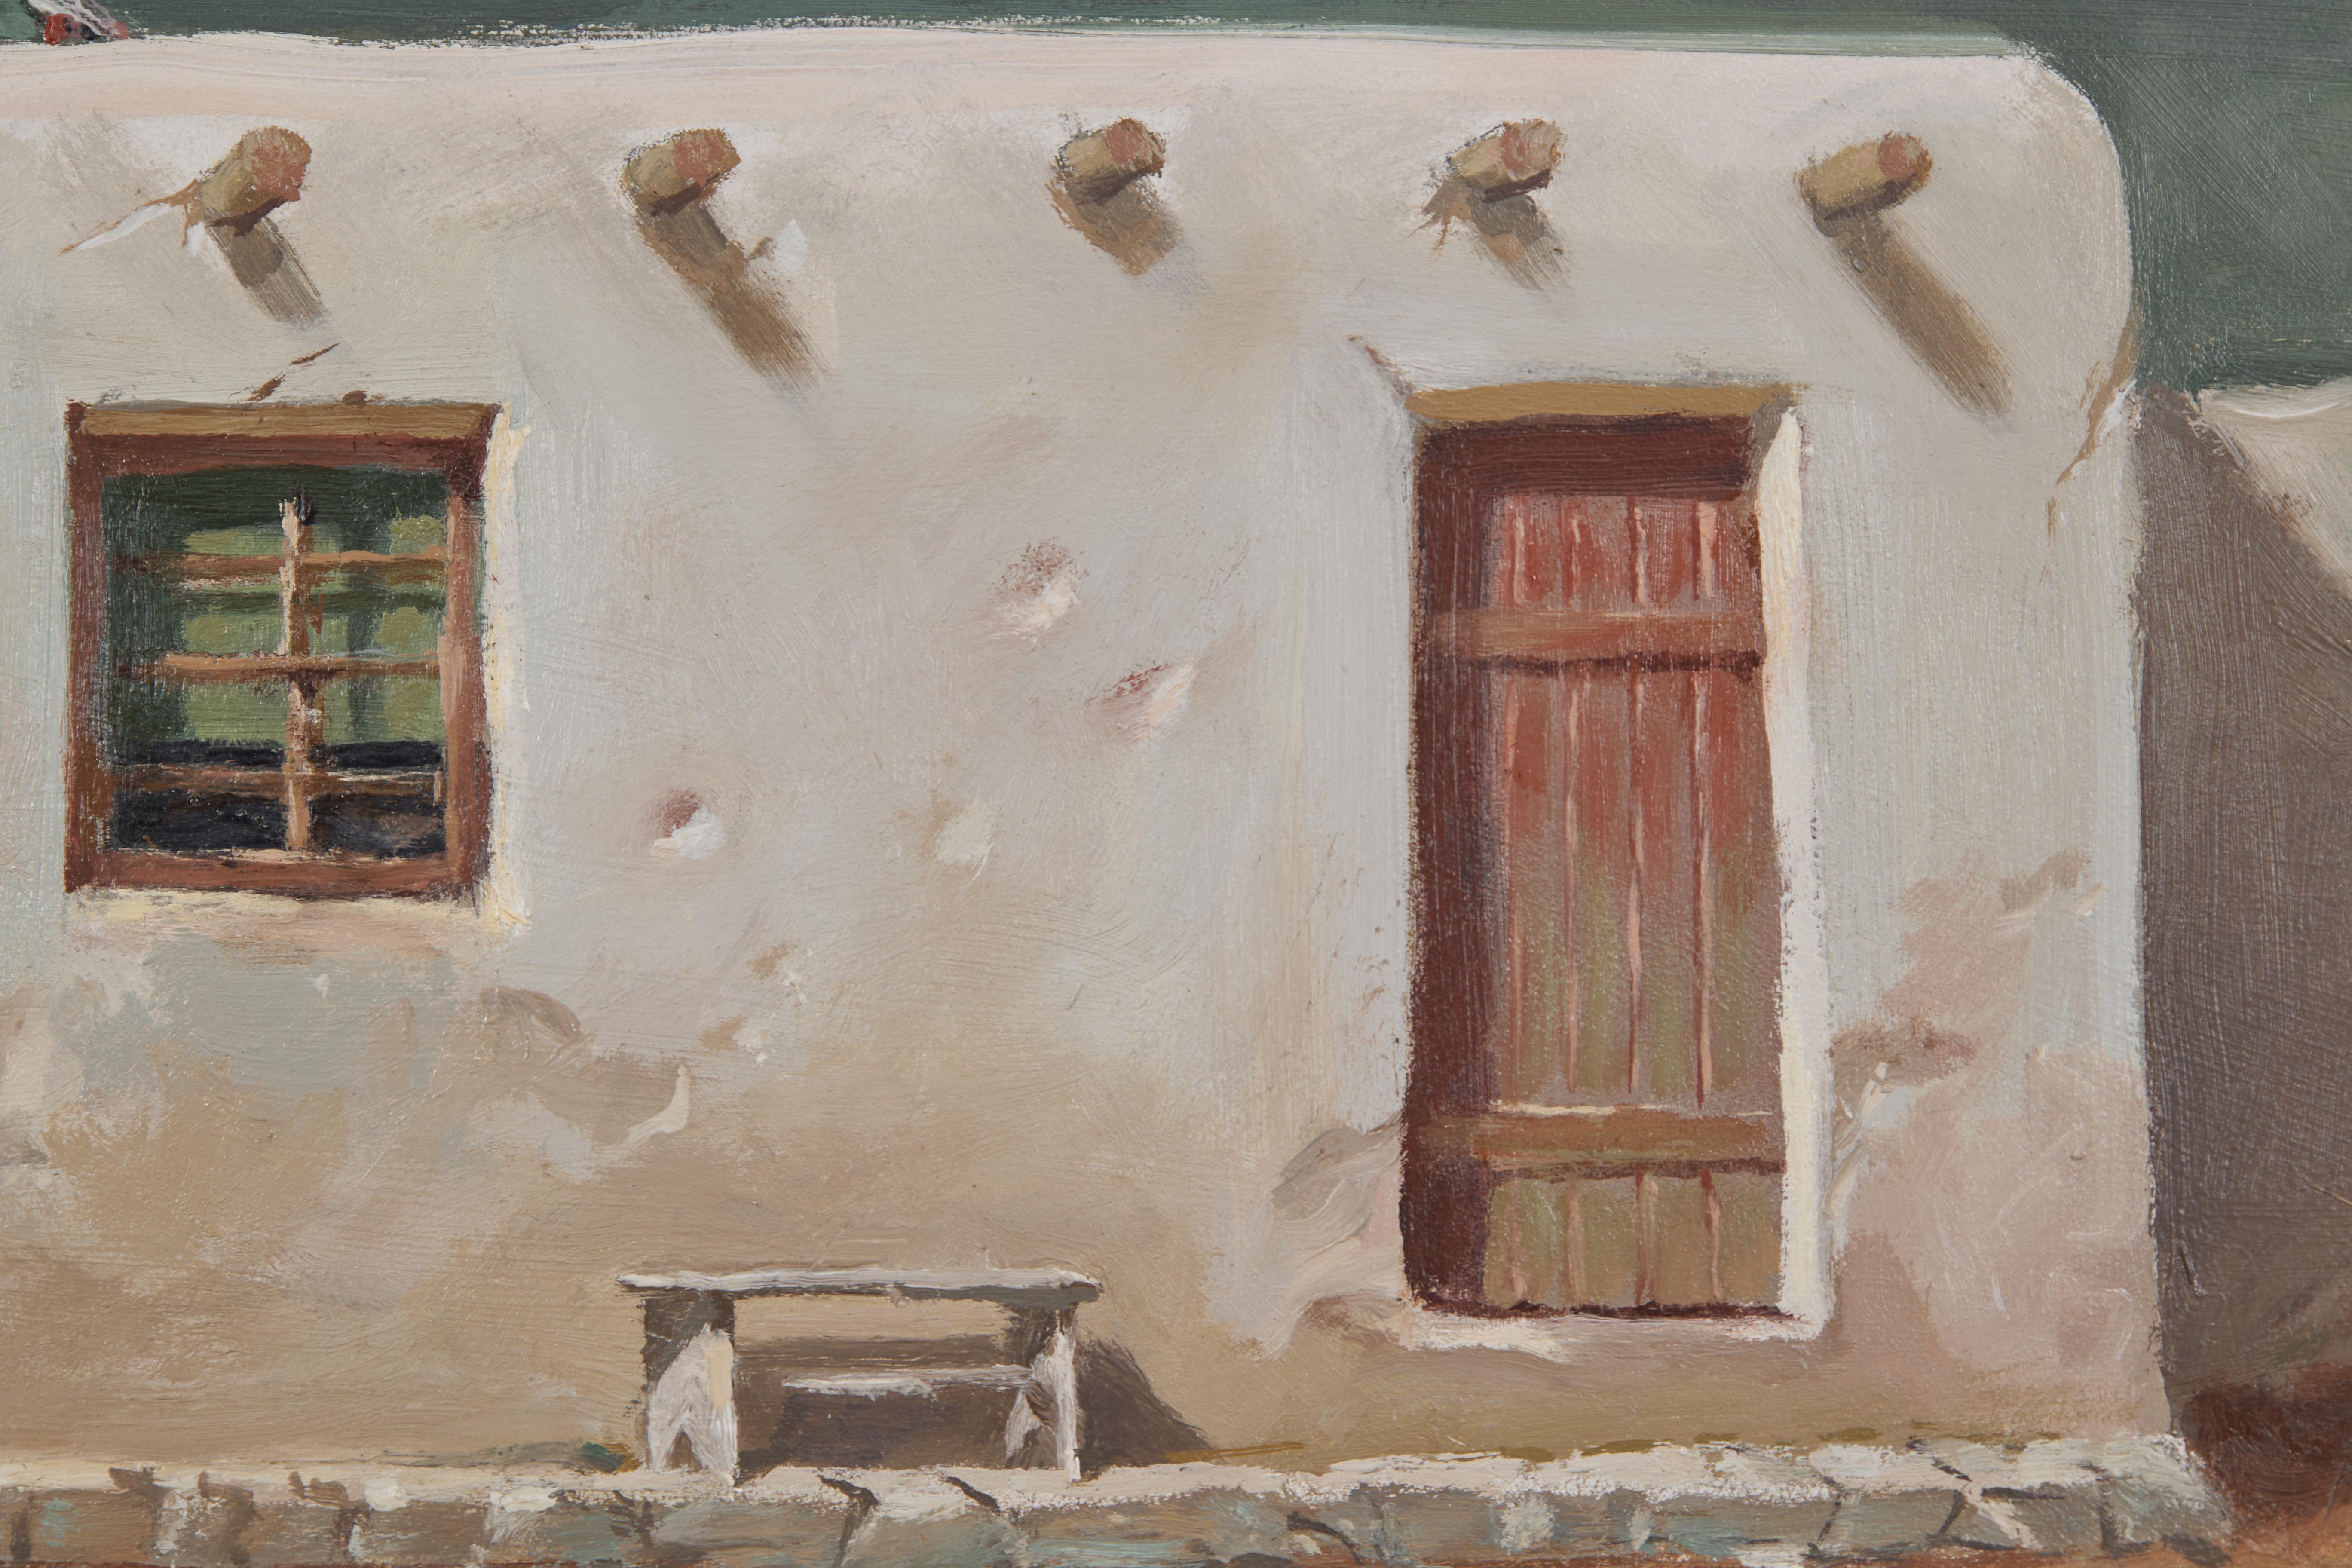 Sante Fe Home, New Mexico, 20th Century Cleveland School Artist, Landscape Scene - Painting by Elmer Ladislaw Novotny